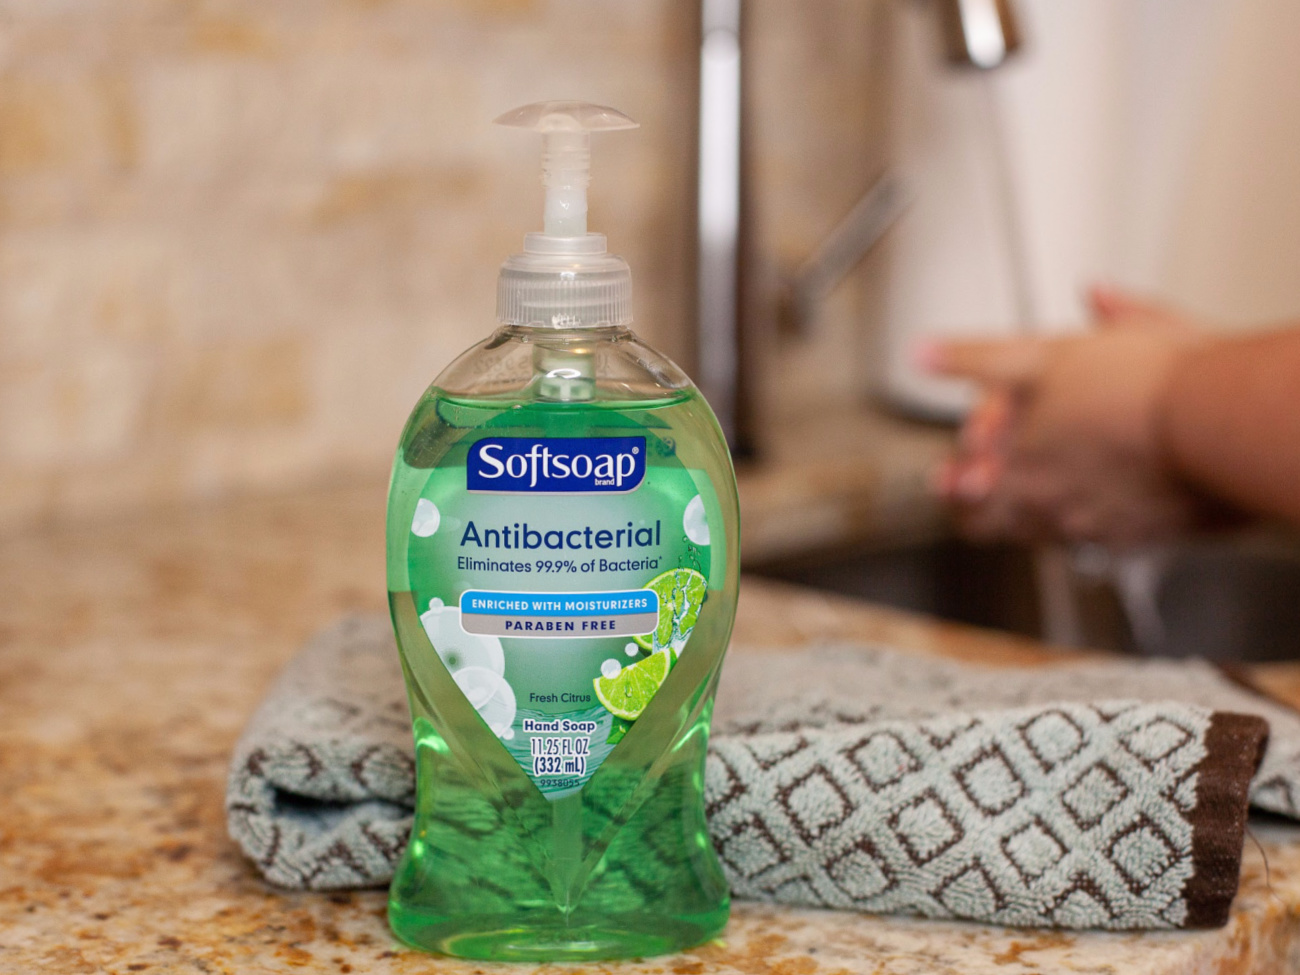 Softsoap Hand Soap Pump Just $1.49 At Kroger – Half Price